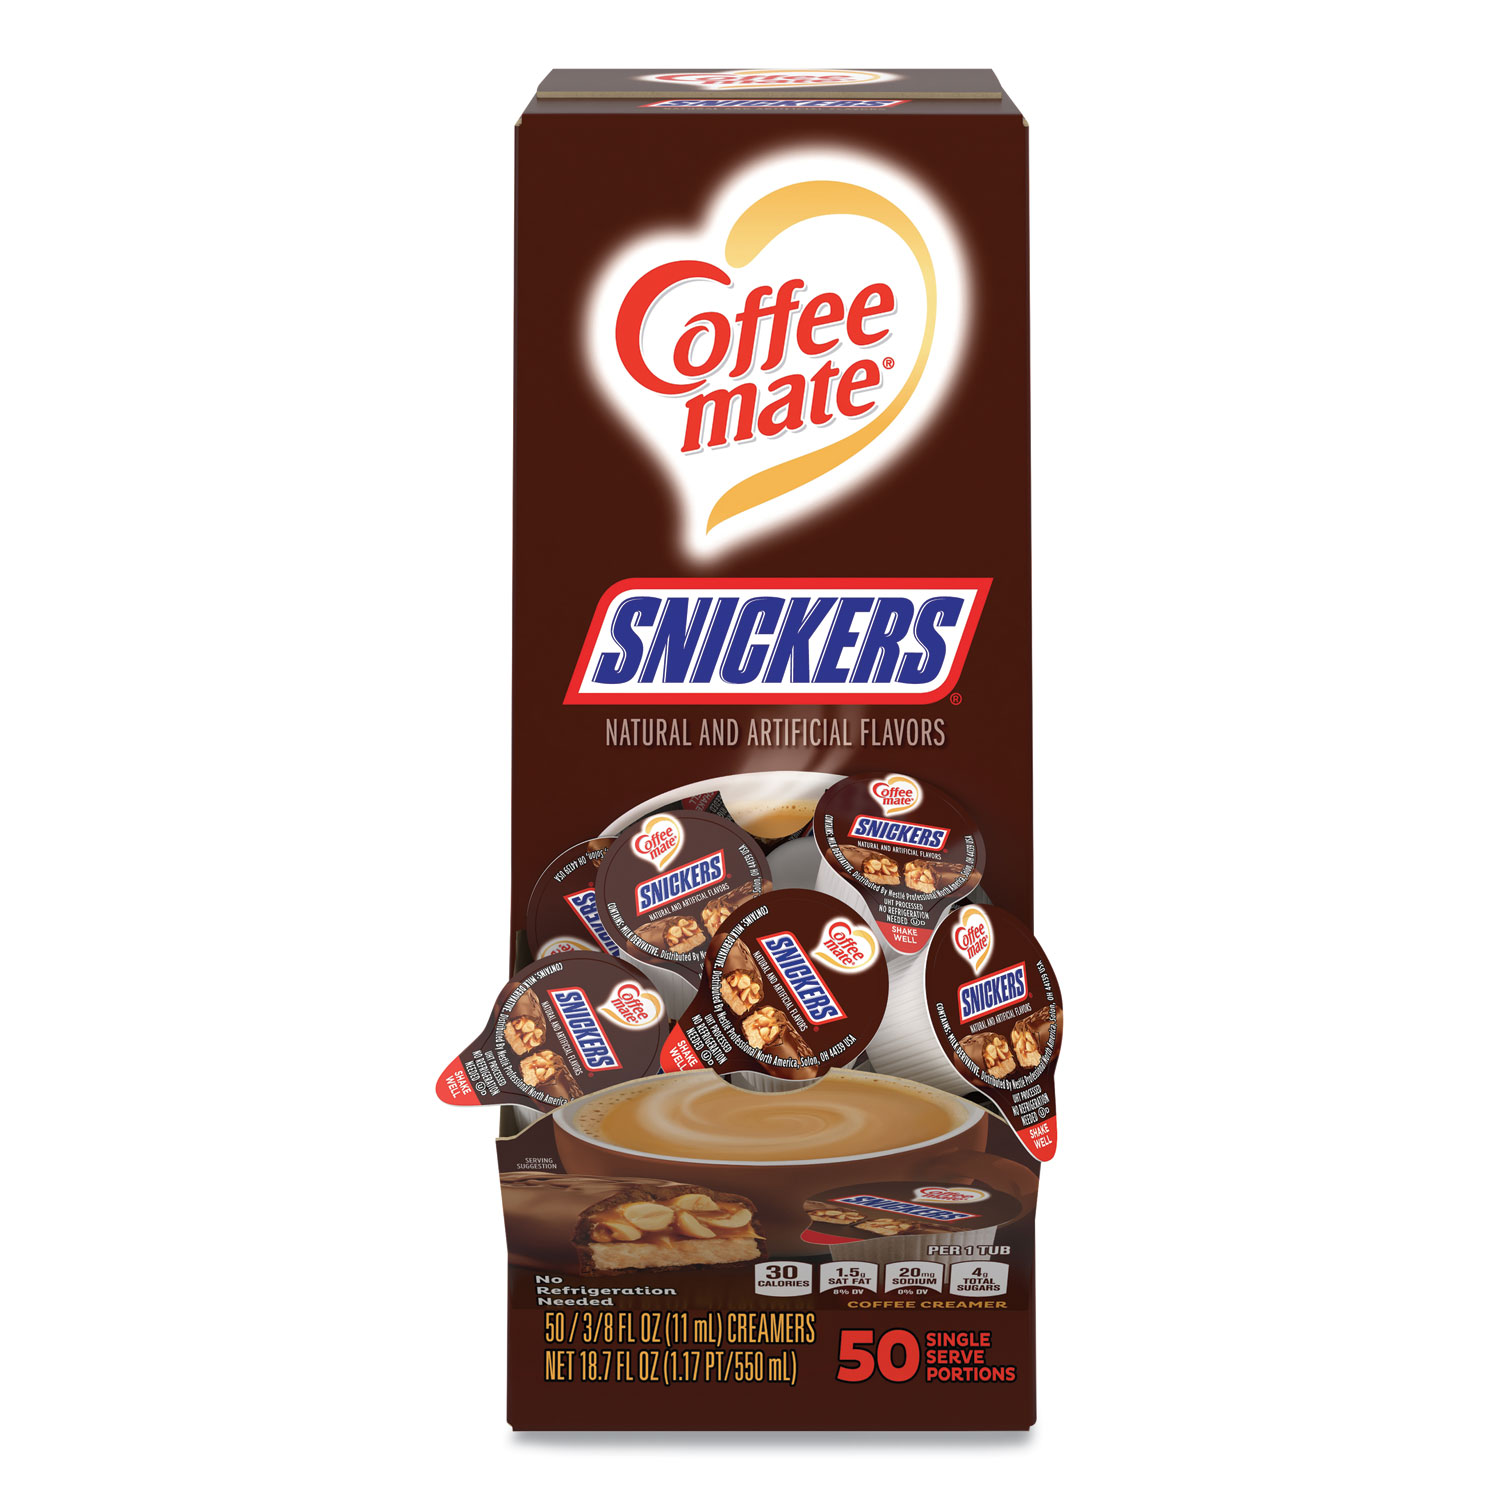 Coffee mate® Liquid Coffee Creamer, Snickers, 0.38 oz Mini Cups, 50 Cups/Box